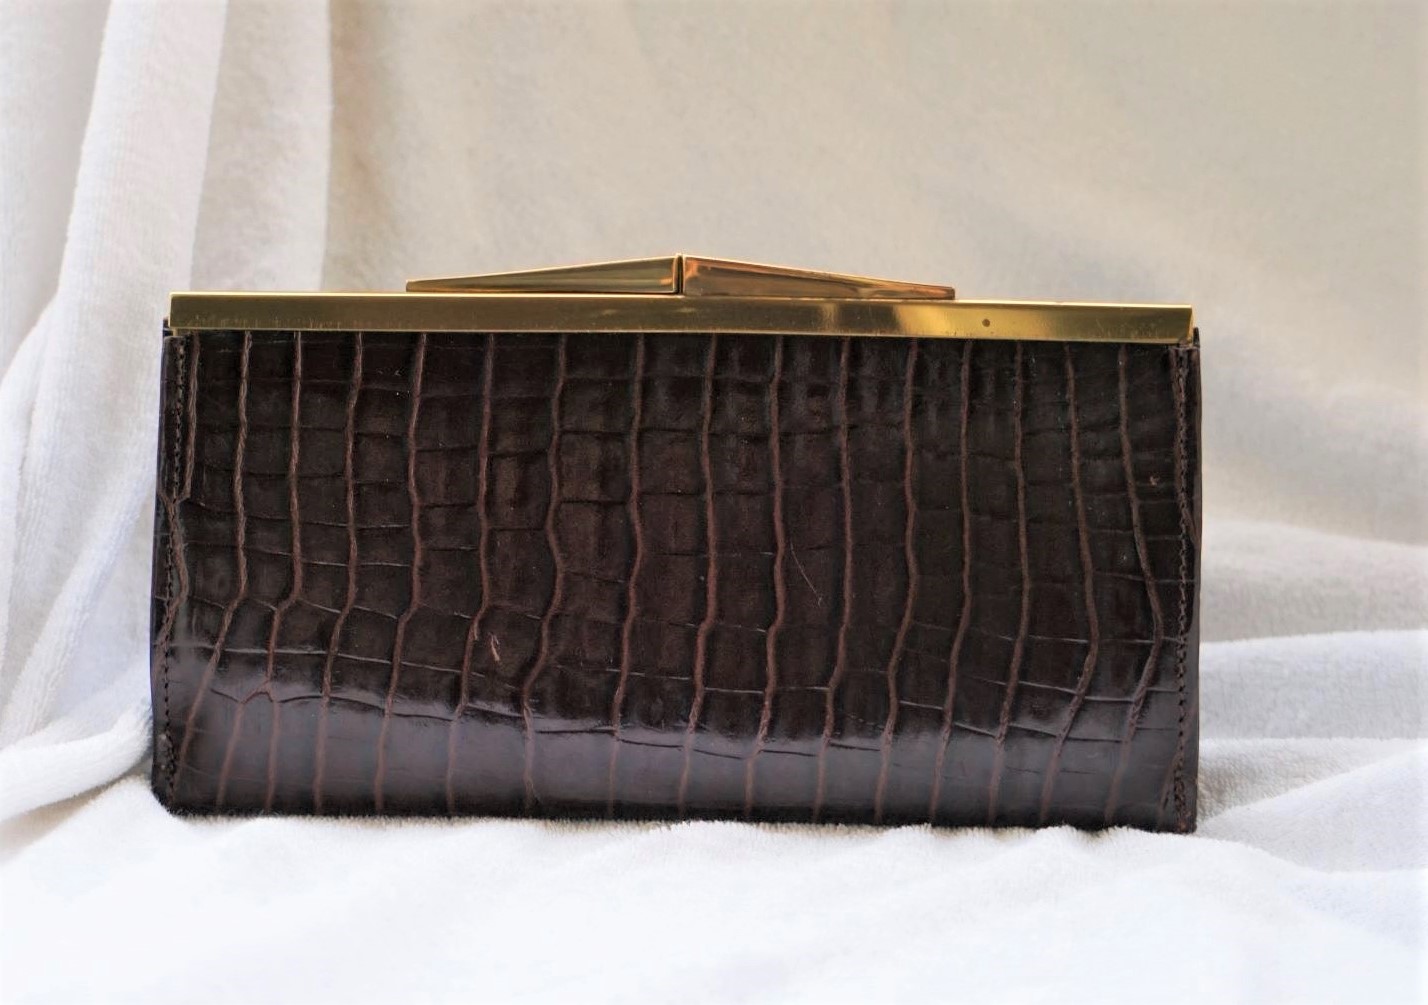 Alligator leather wallet by Renwick 0